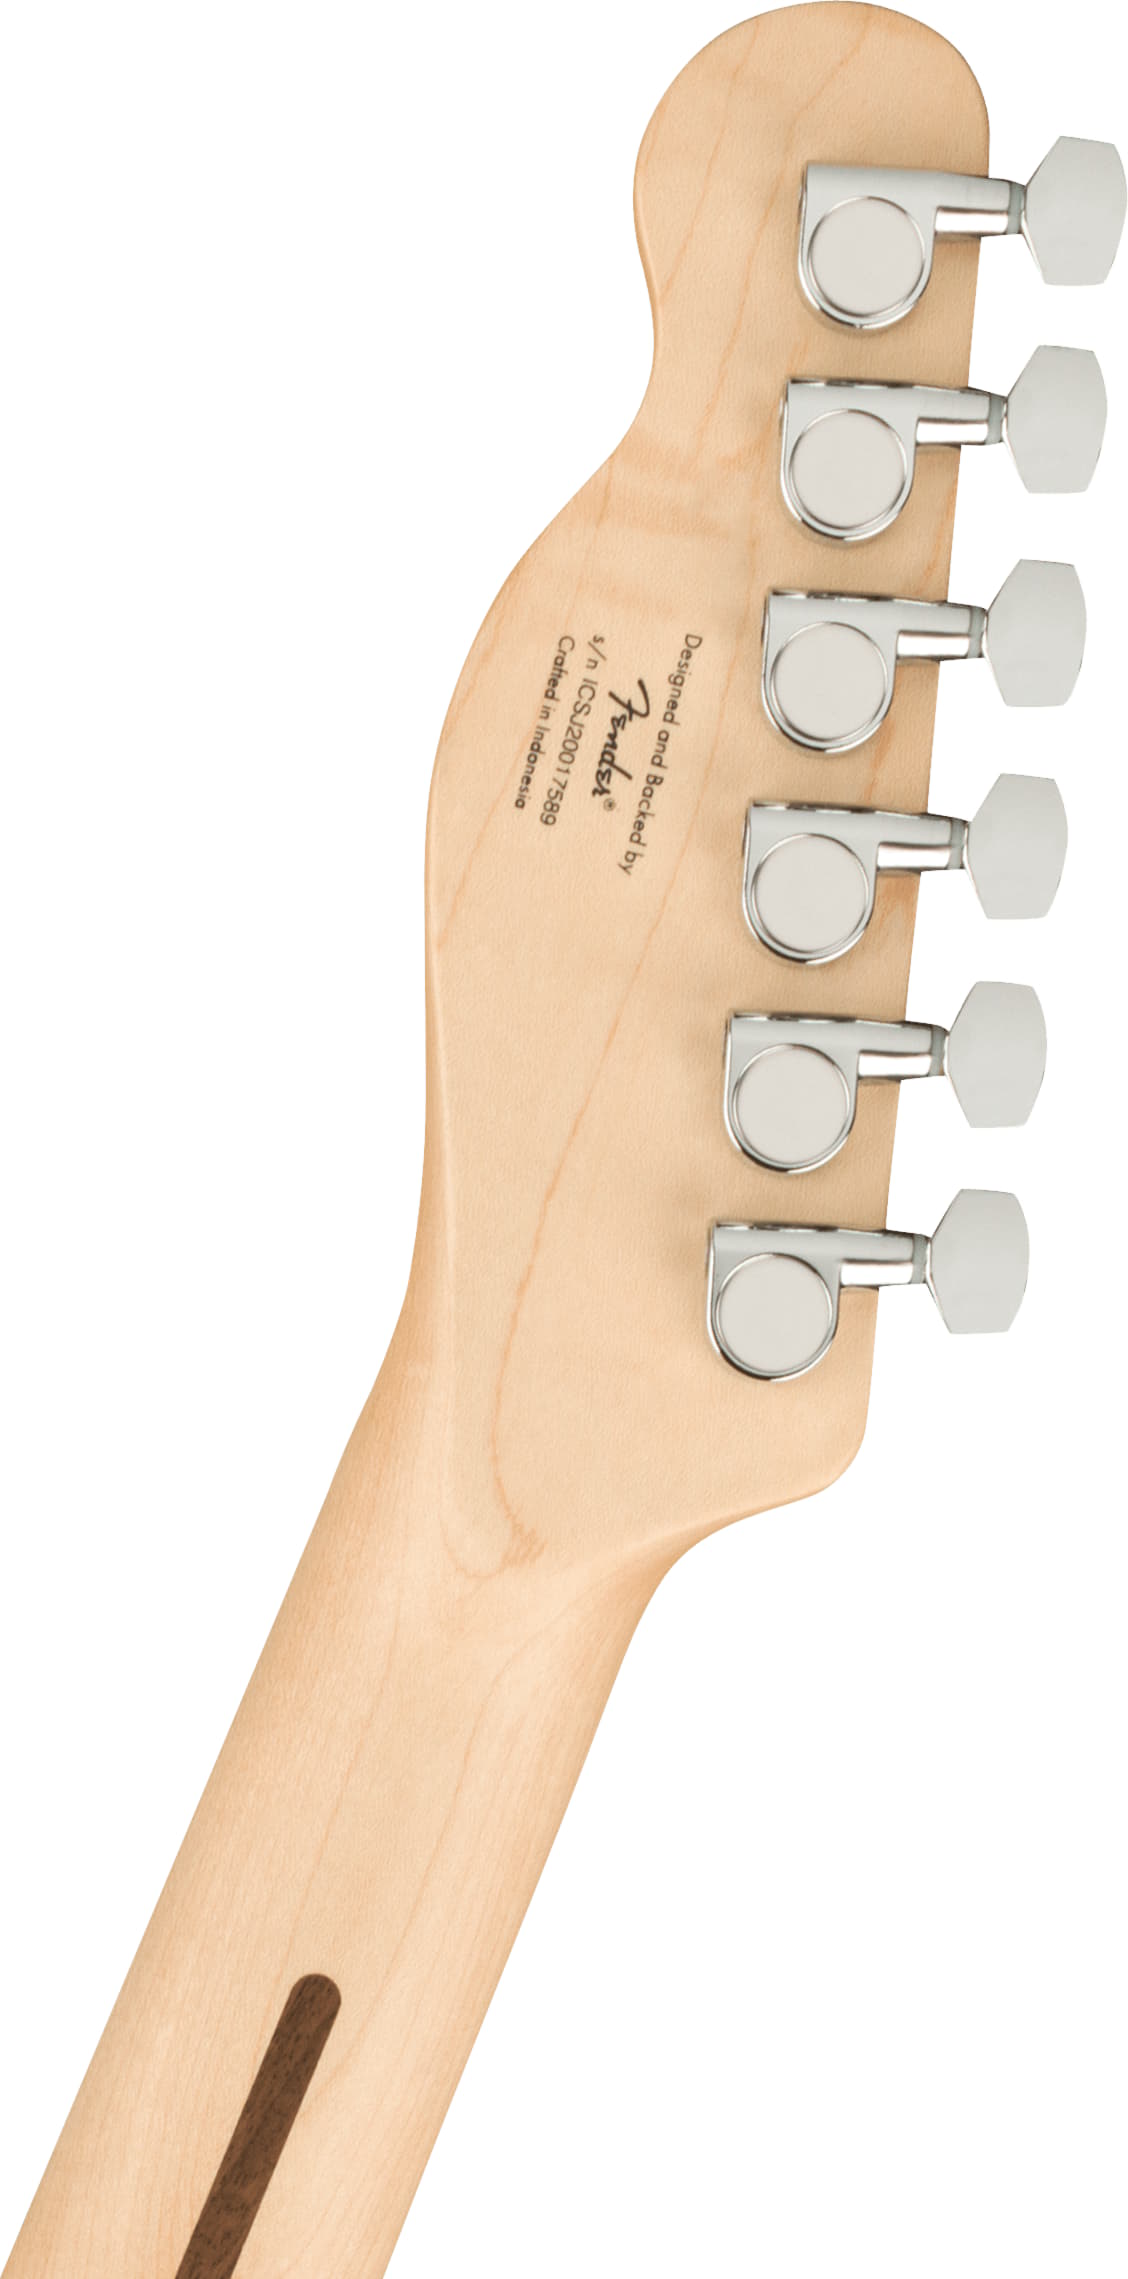 Fender Squier Affinity 2021 Telecaster LRL Lake Placid Blue по цене 42 900 ₽